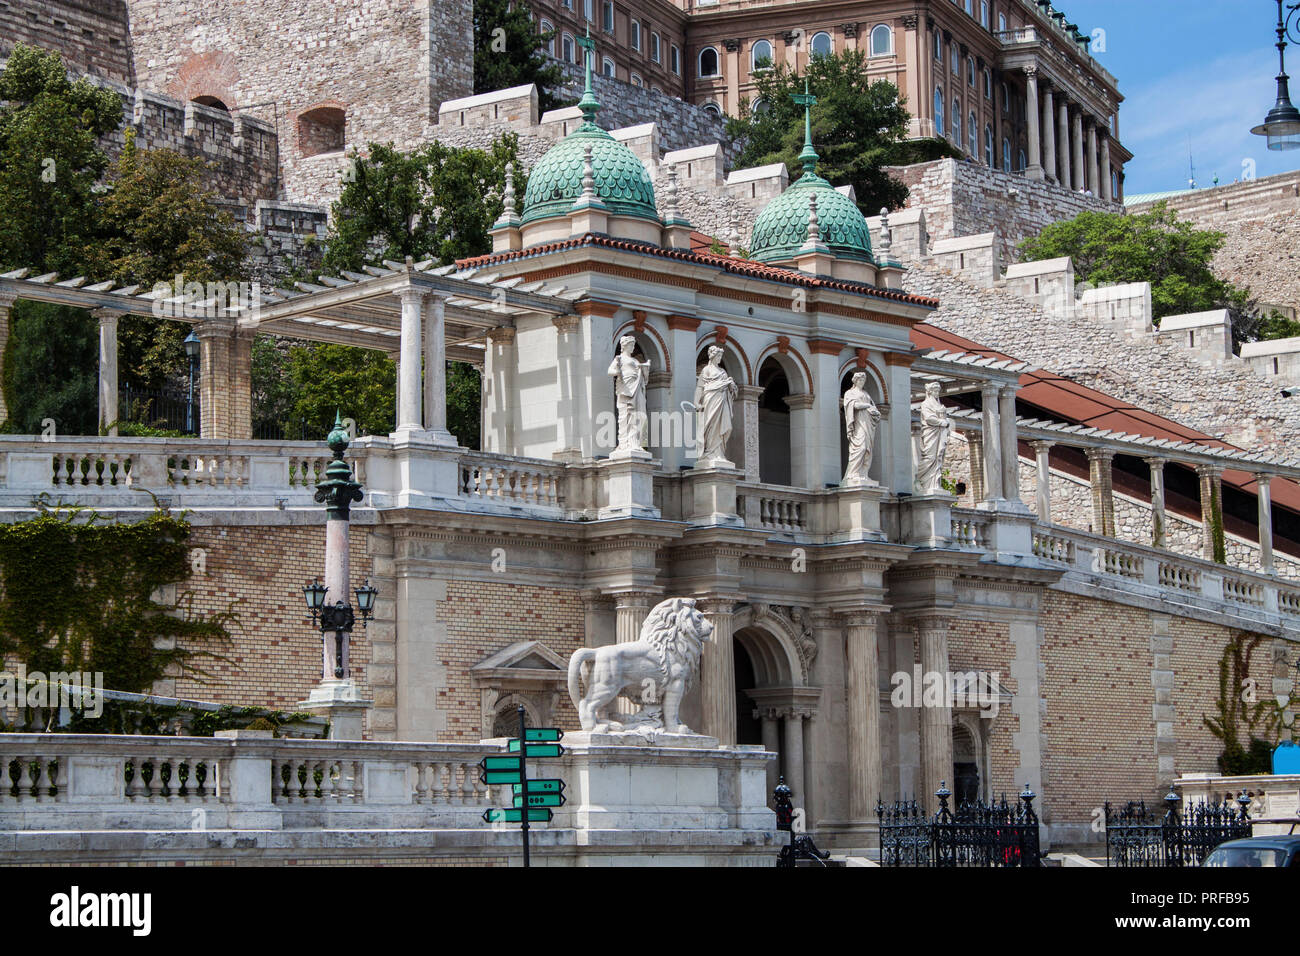 Eingang Des Historischen Schlosses Garten Basar In Budapest